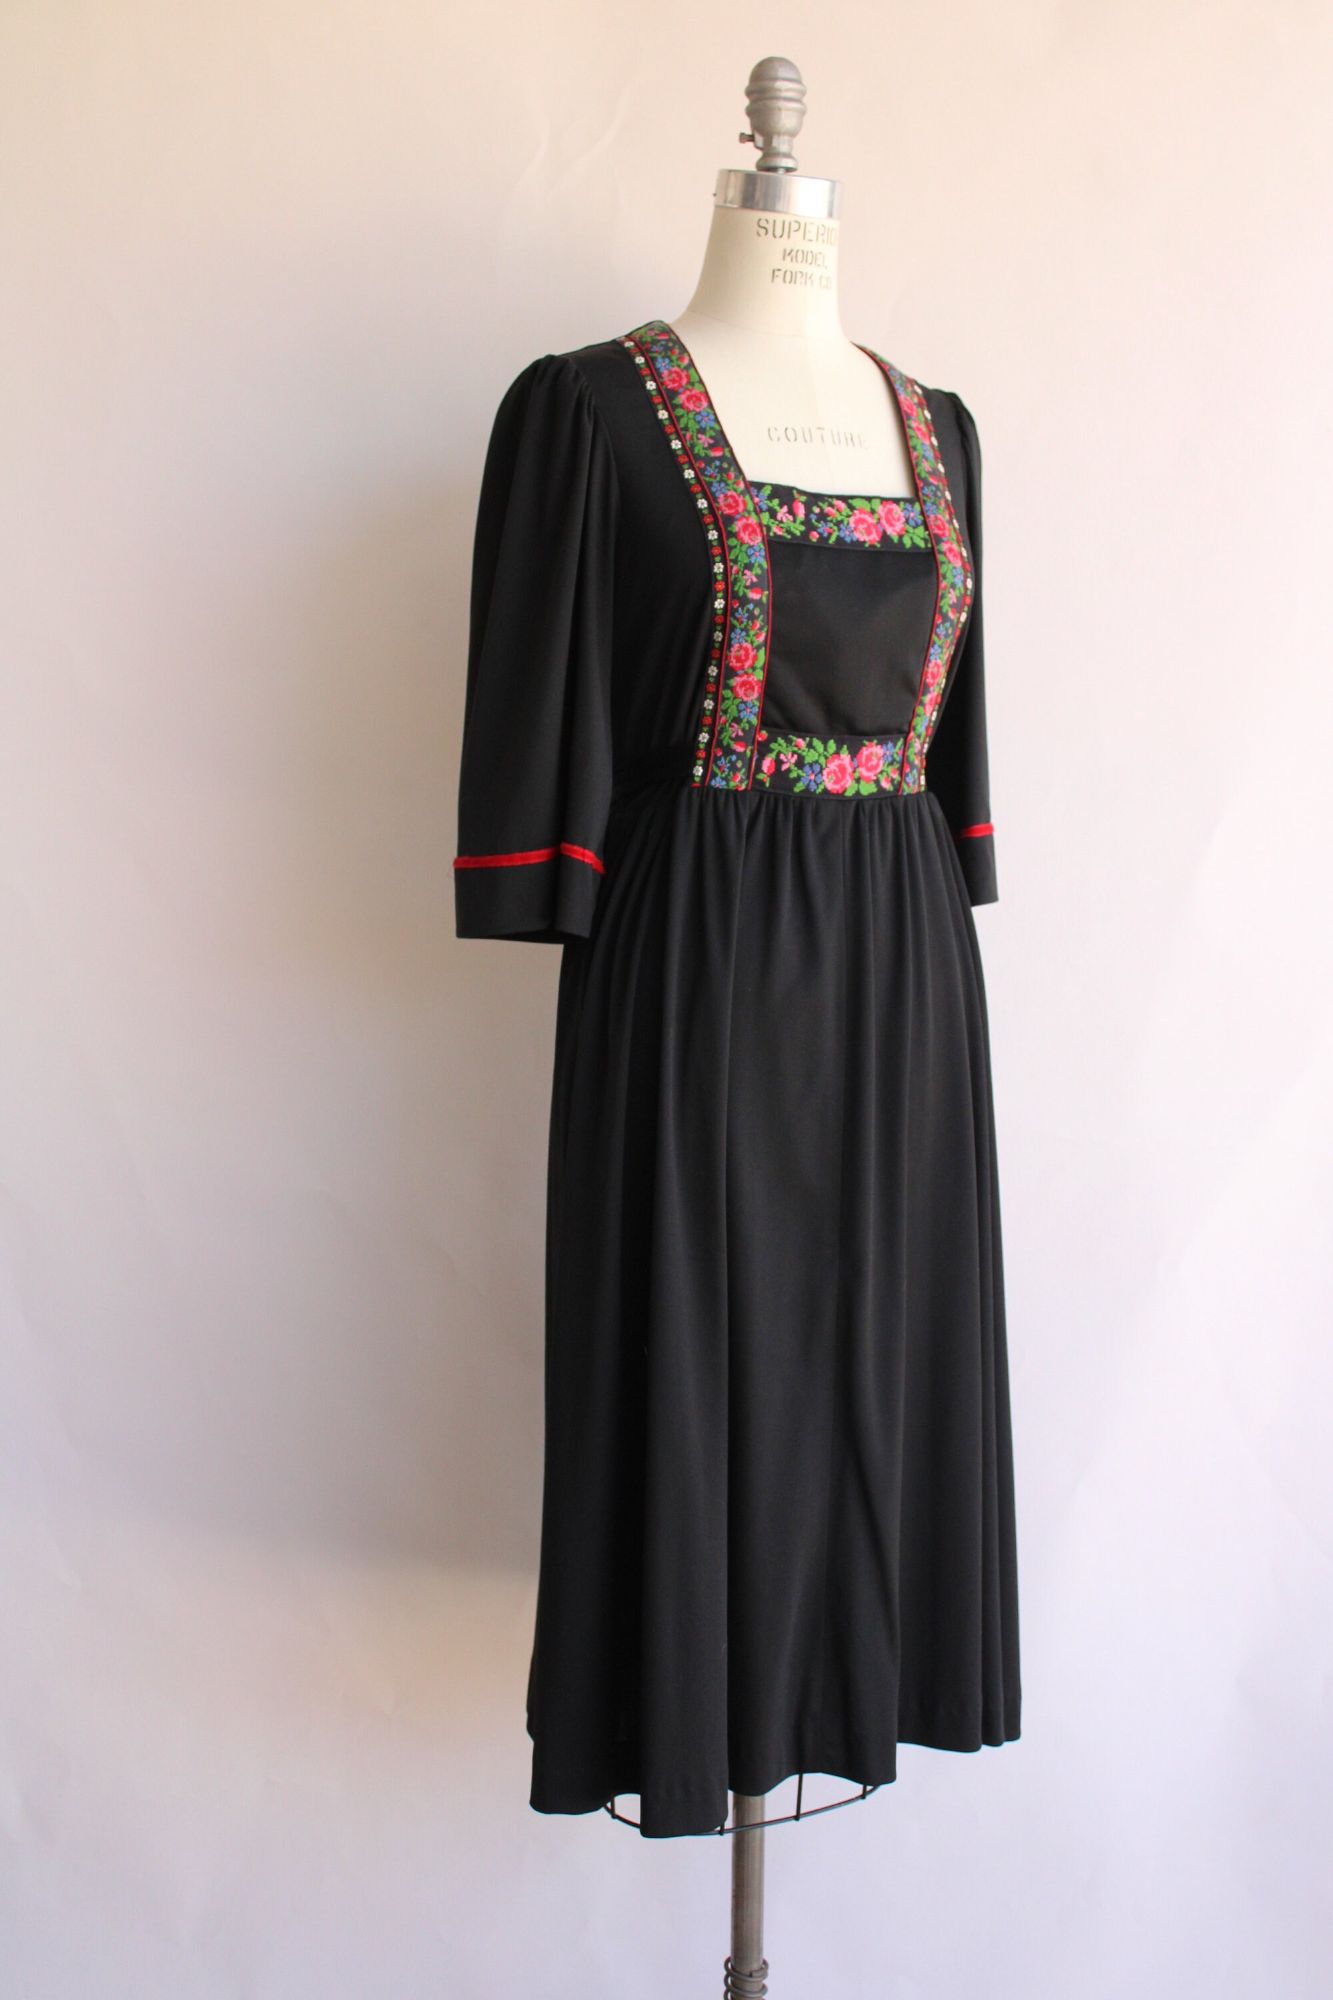 Vintage 1970s Young Edwardian by Arpeja Black Peasant Dress